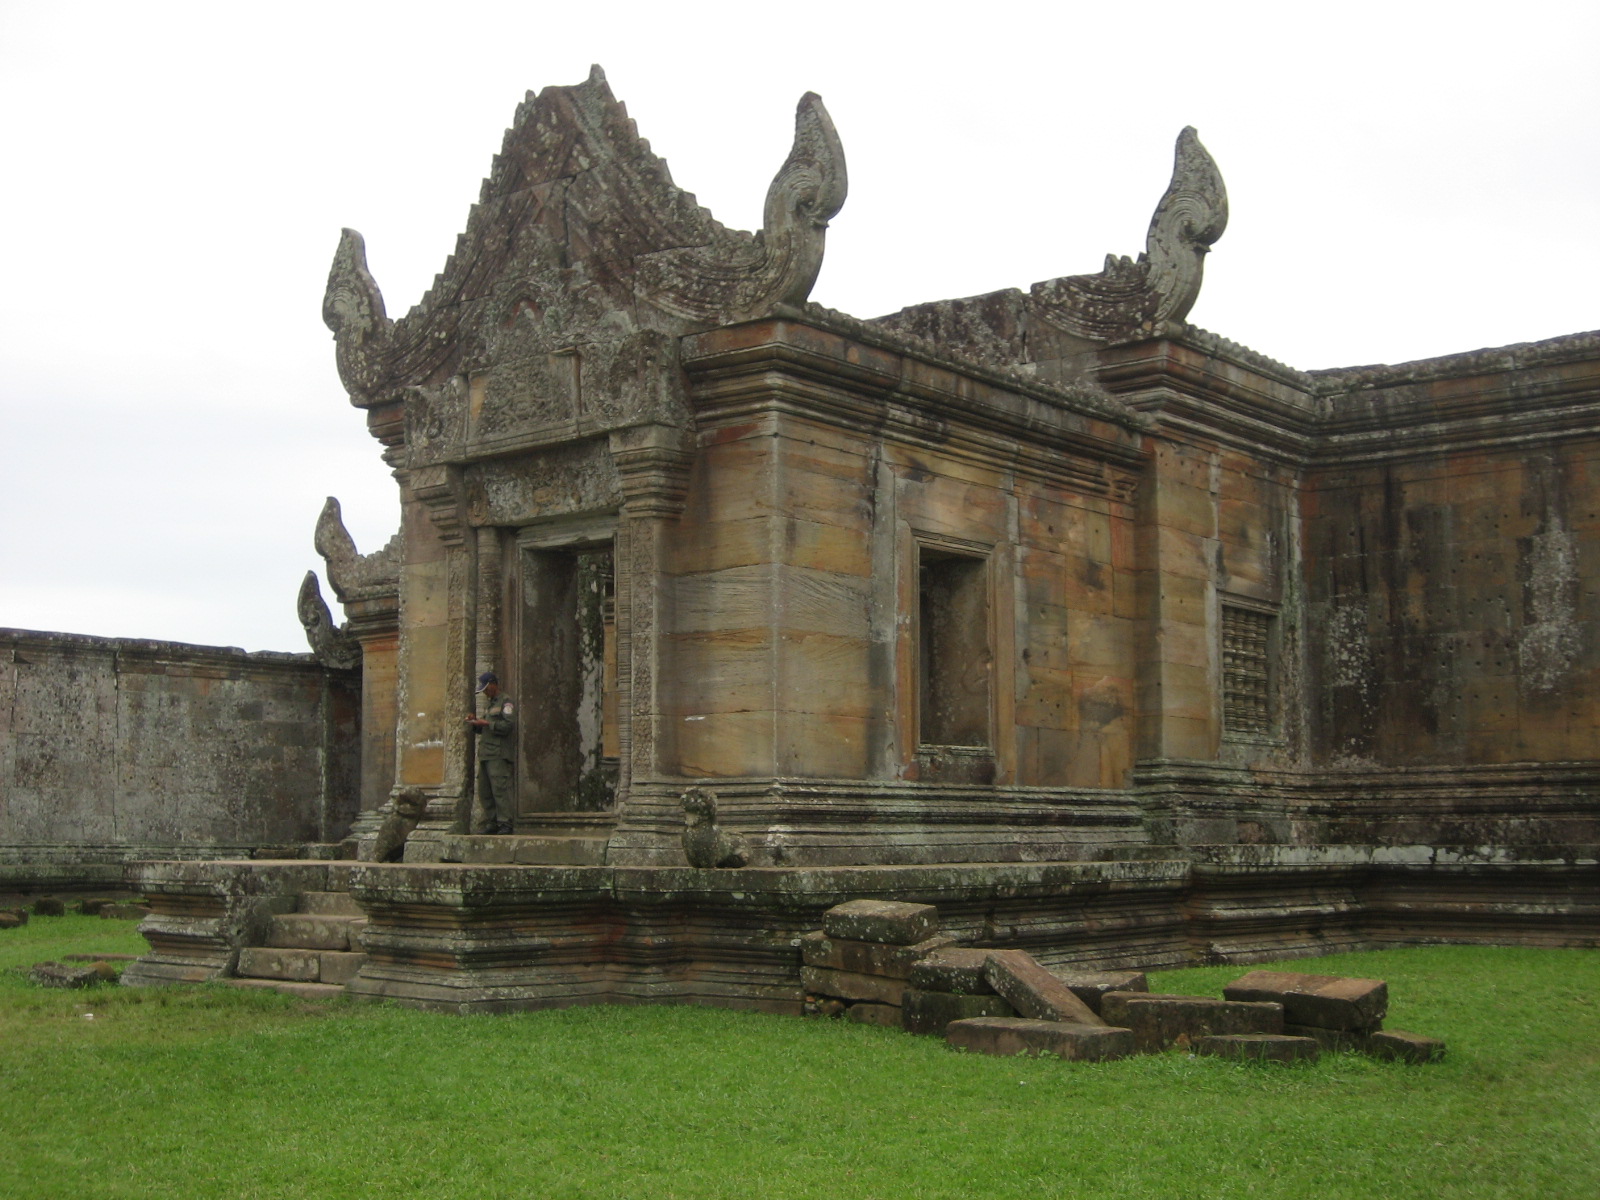 https://upload.wikimedia.org/wikipedia/commons/e/e9/Preah-vihear.jpg